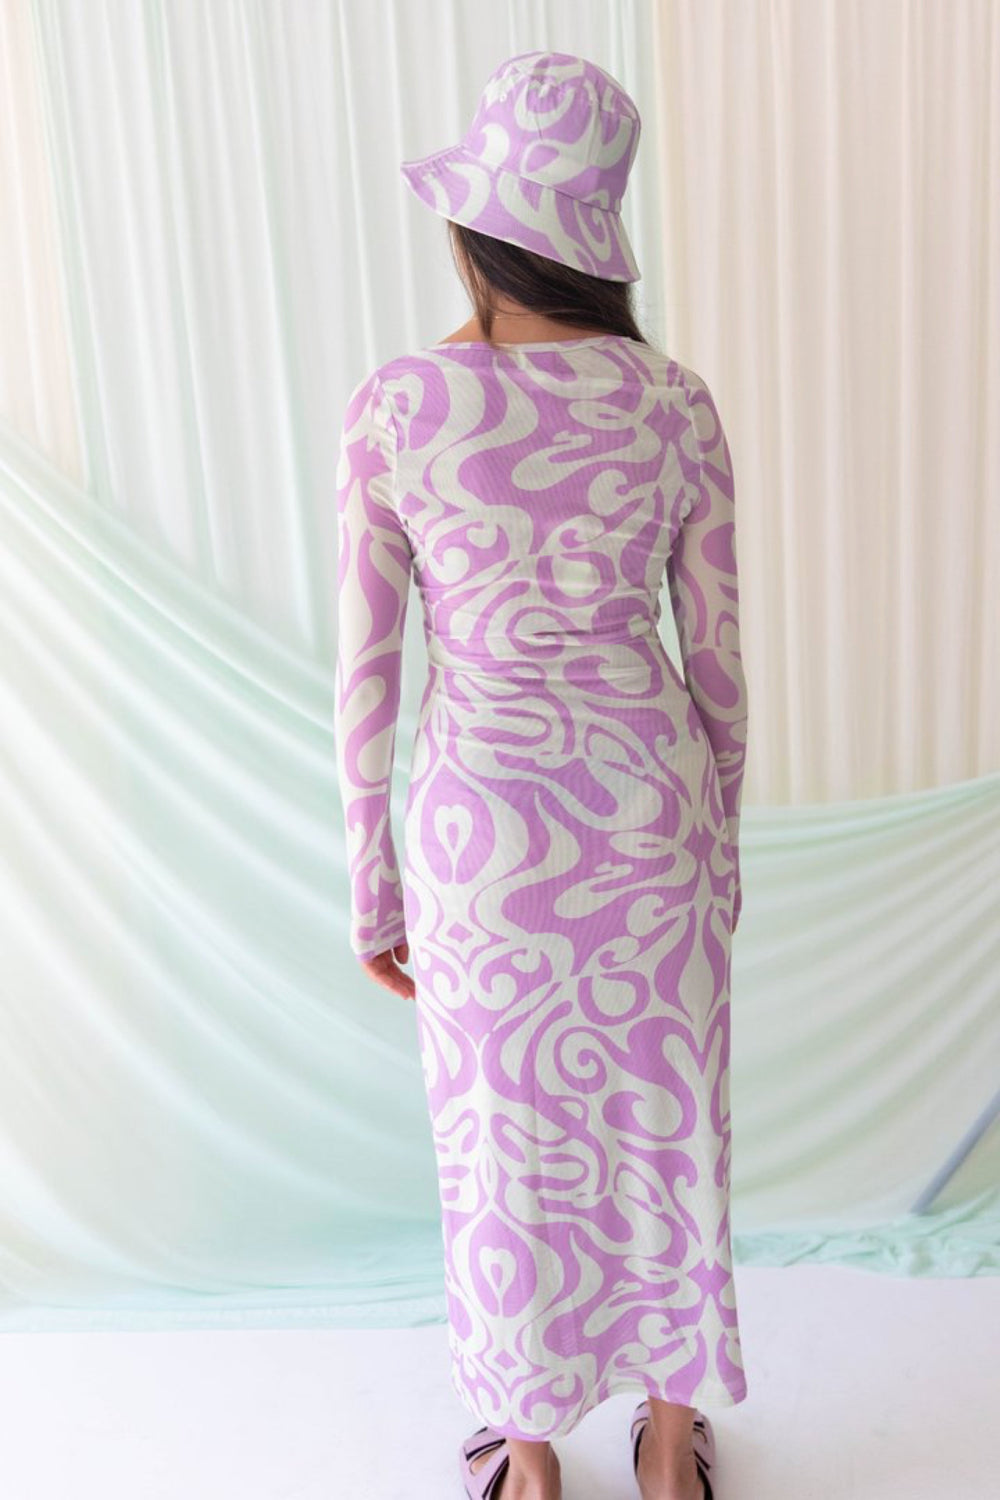 Lavender Mint Dream on Dress